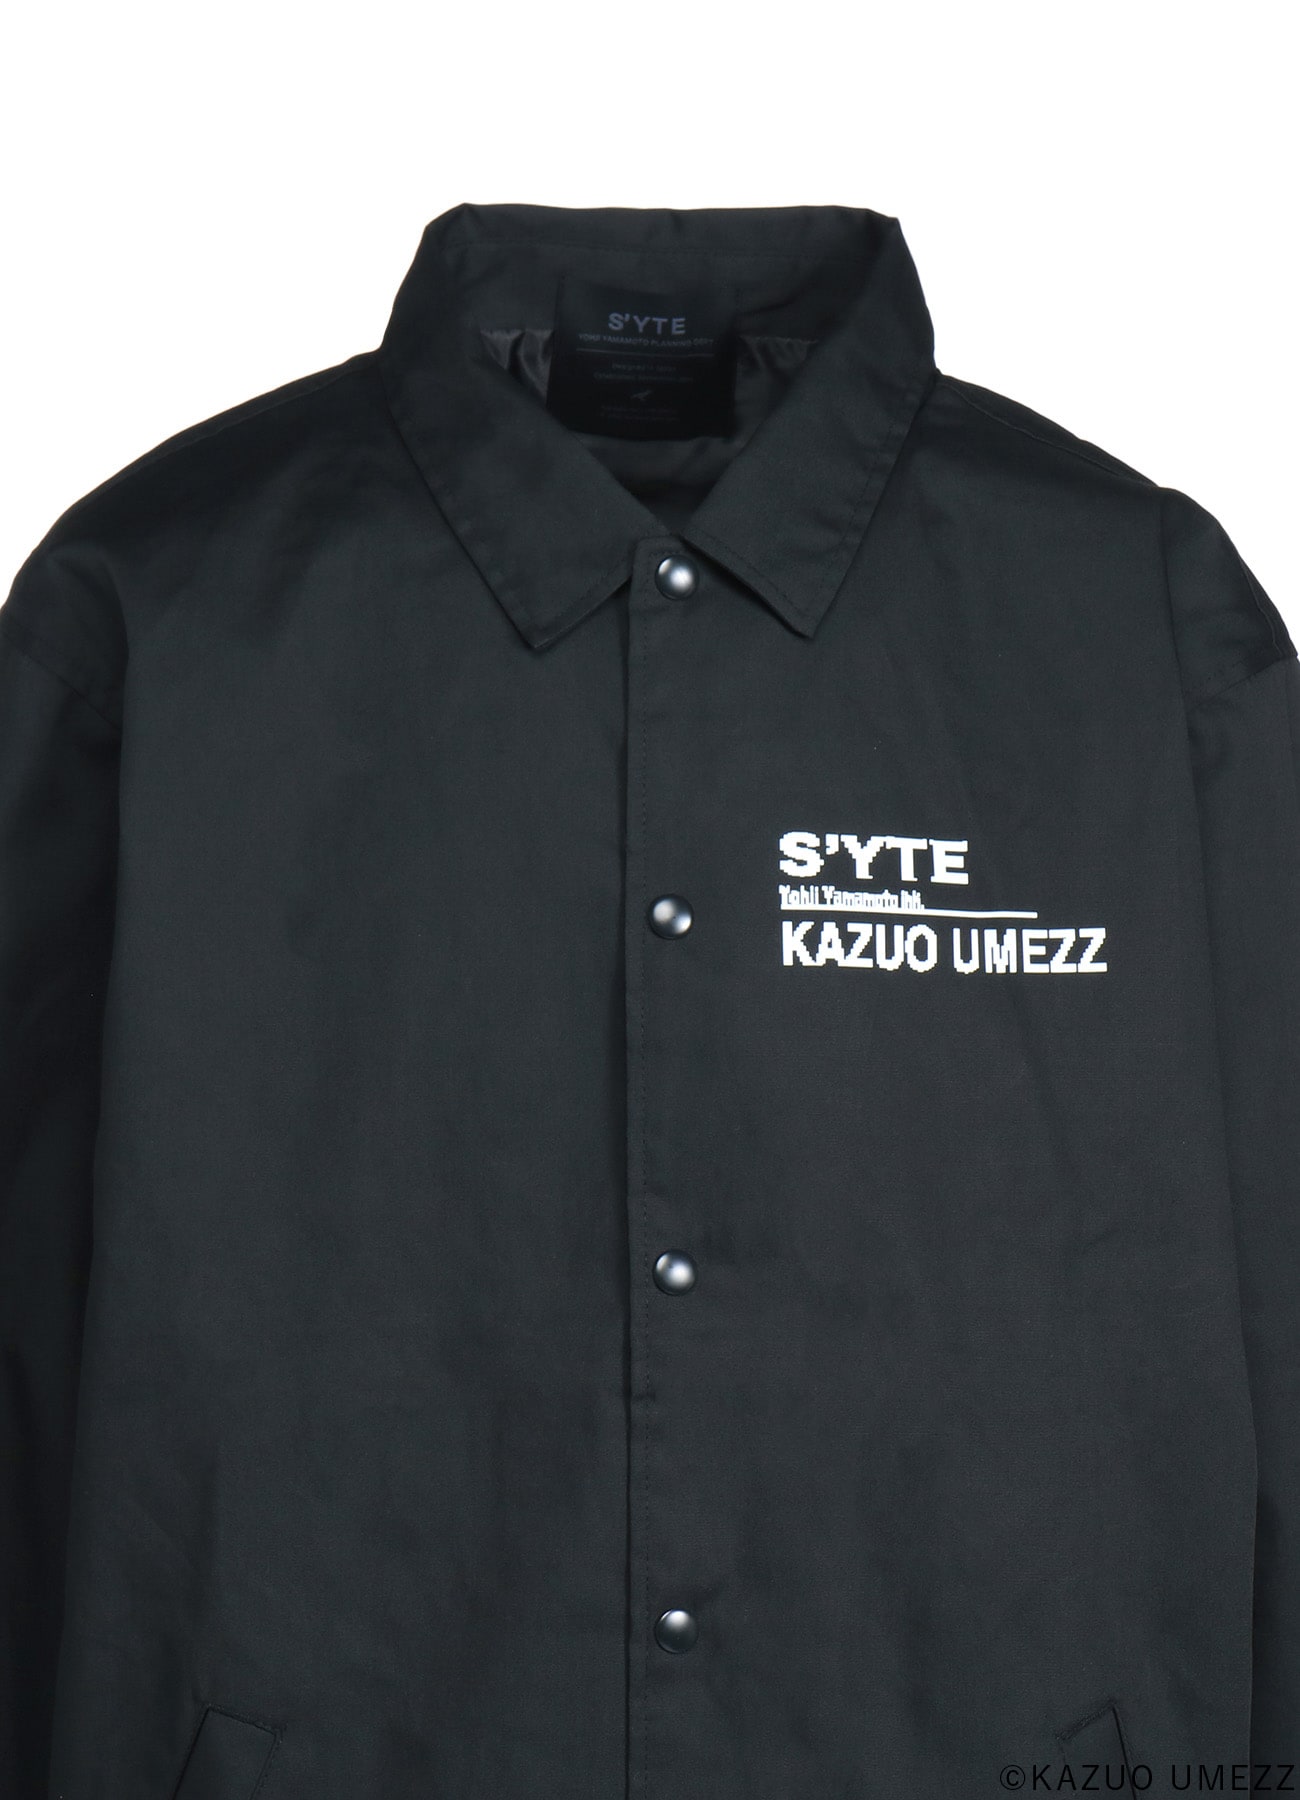 S'YTExKAZUO UMEZZ T/C WEATHER CLOTH COACH JACKET PRINTED WITH ARTWORK FEATURING ZOKU-SHINGO-HAND PRINTS-